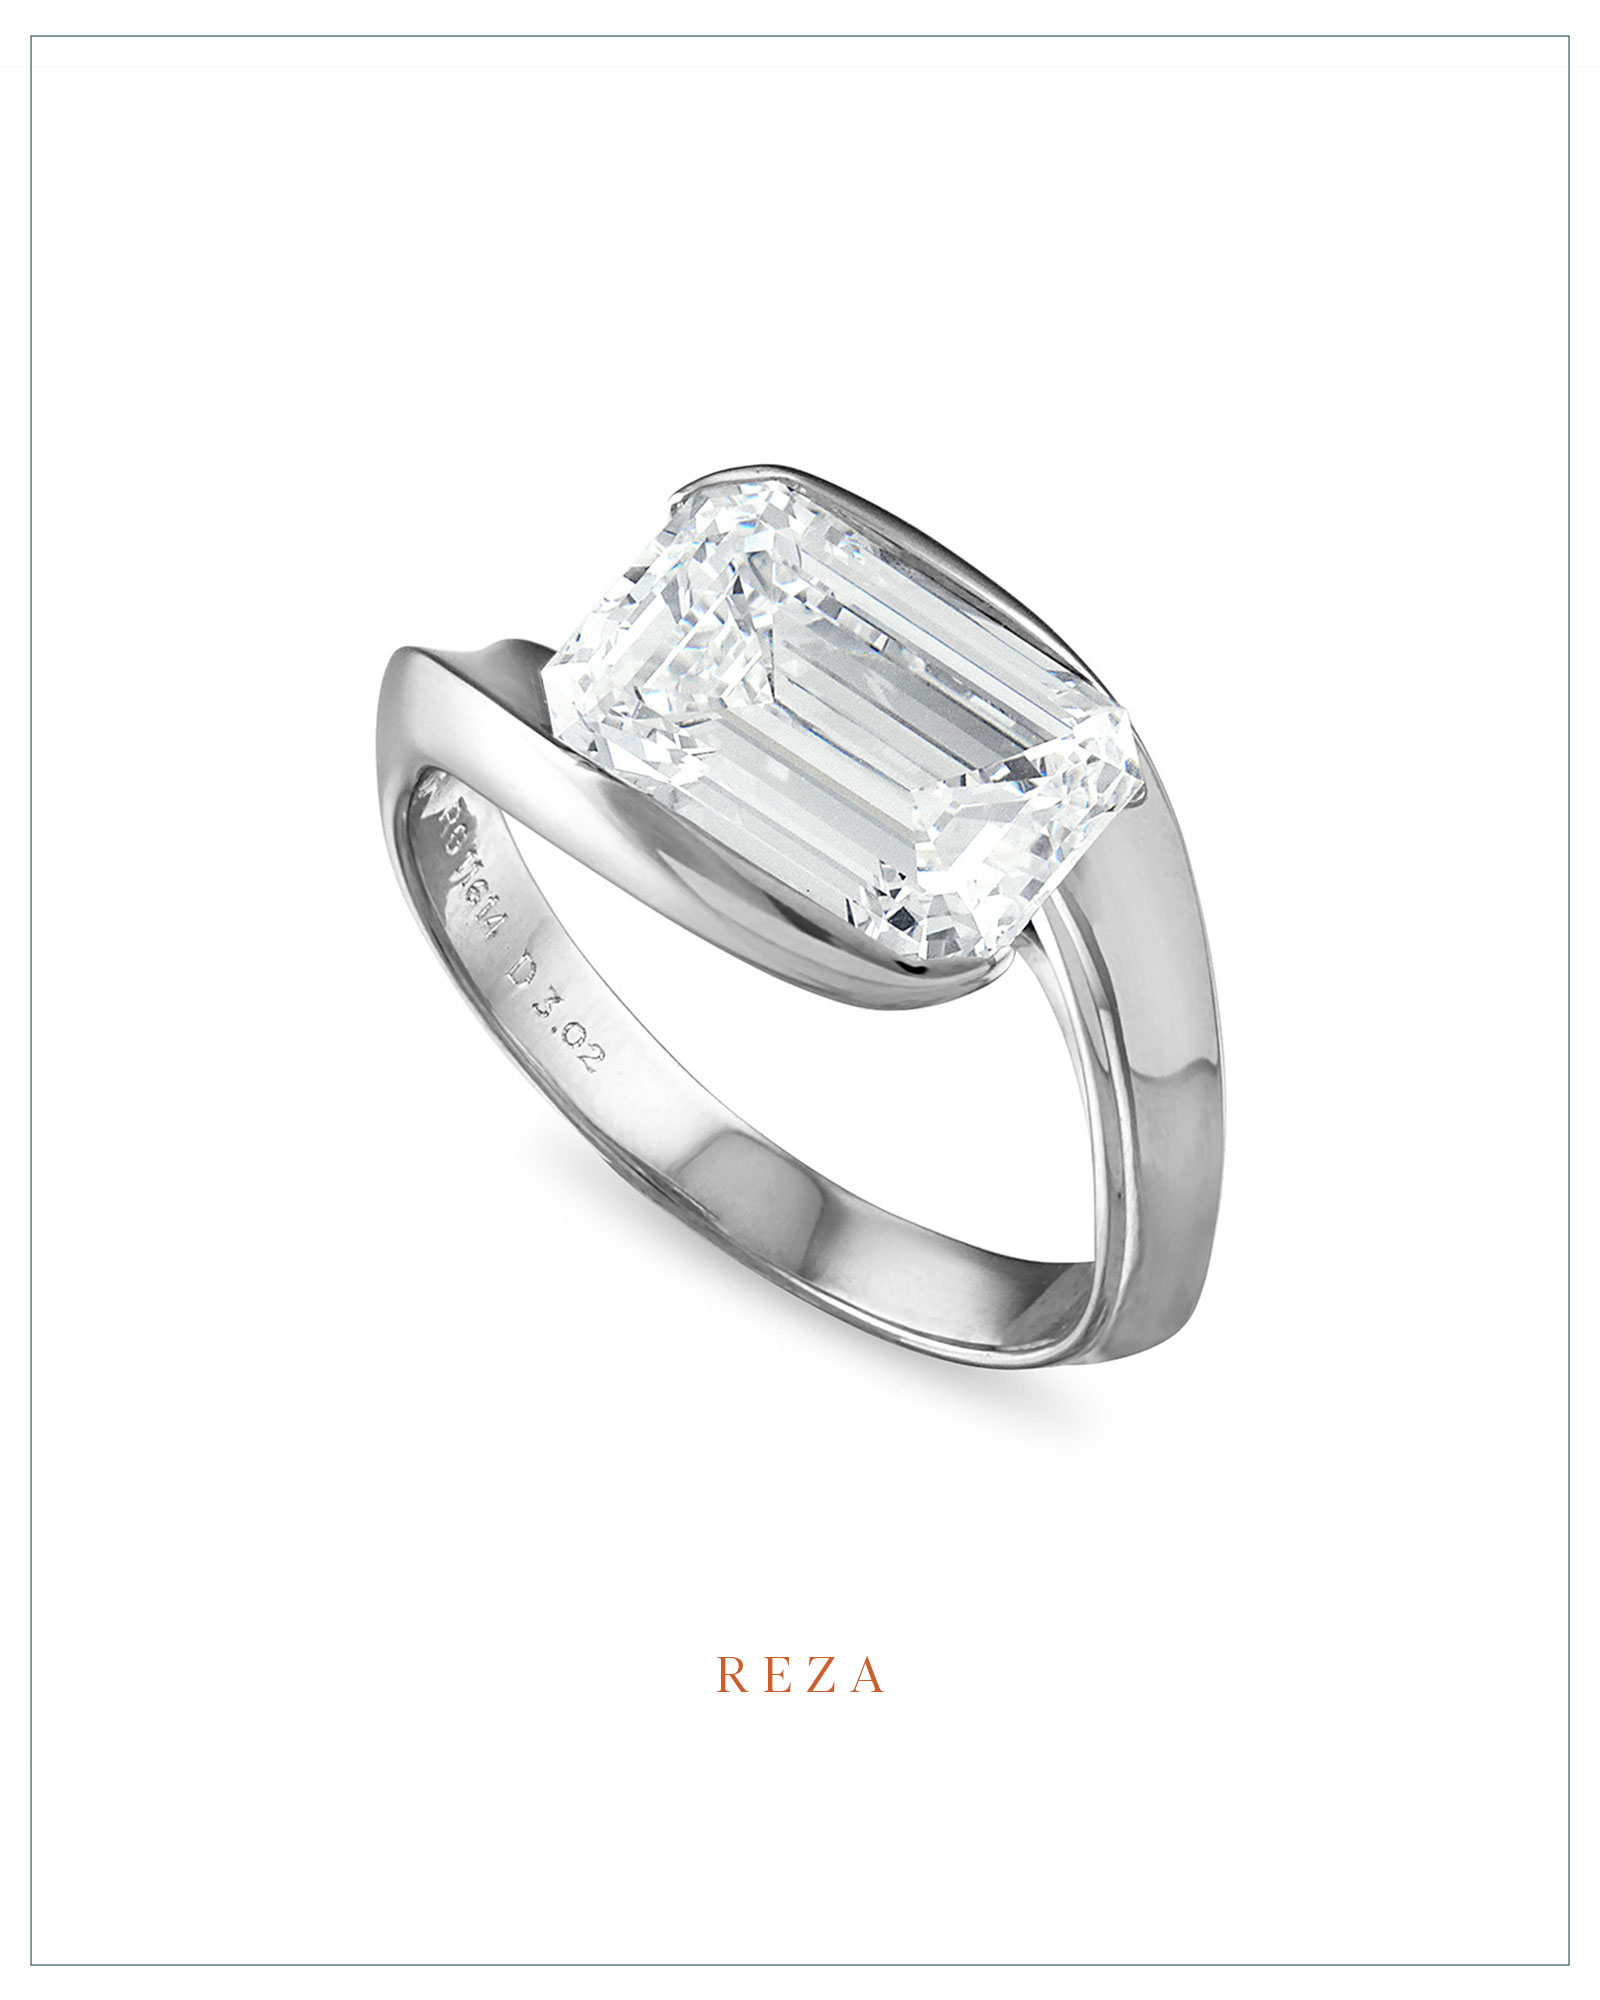 Reza solitaire ring with emerald-cut diamond